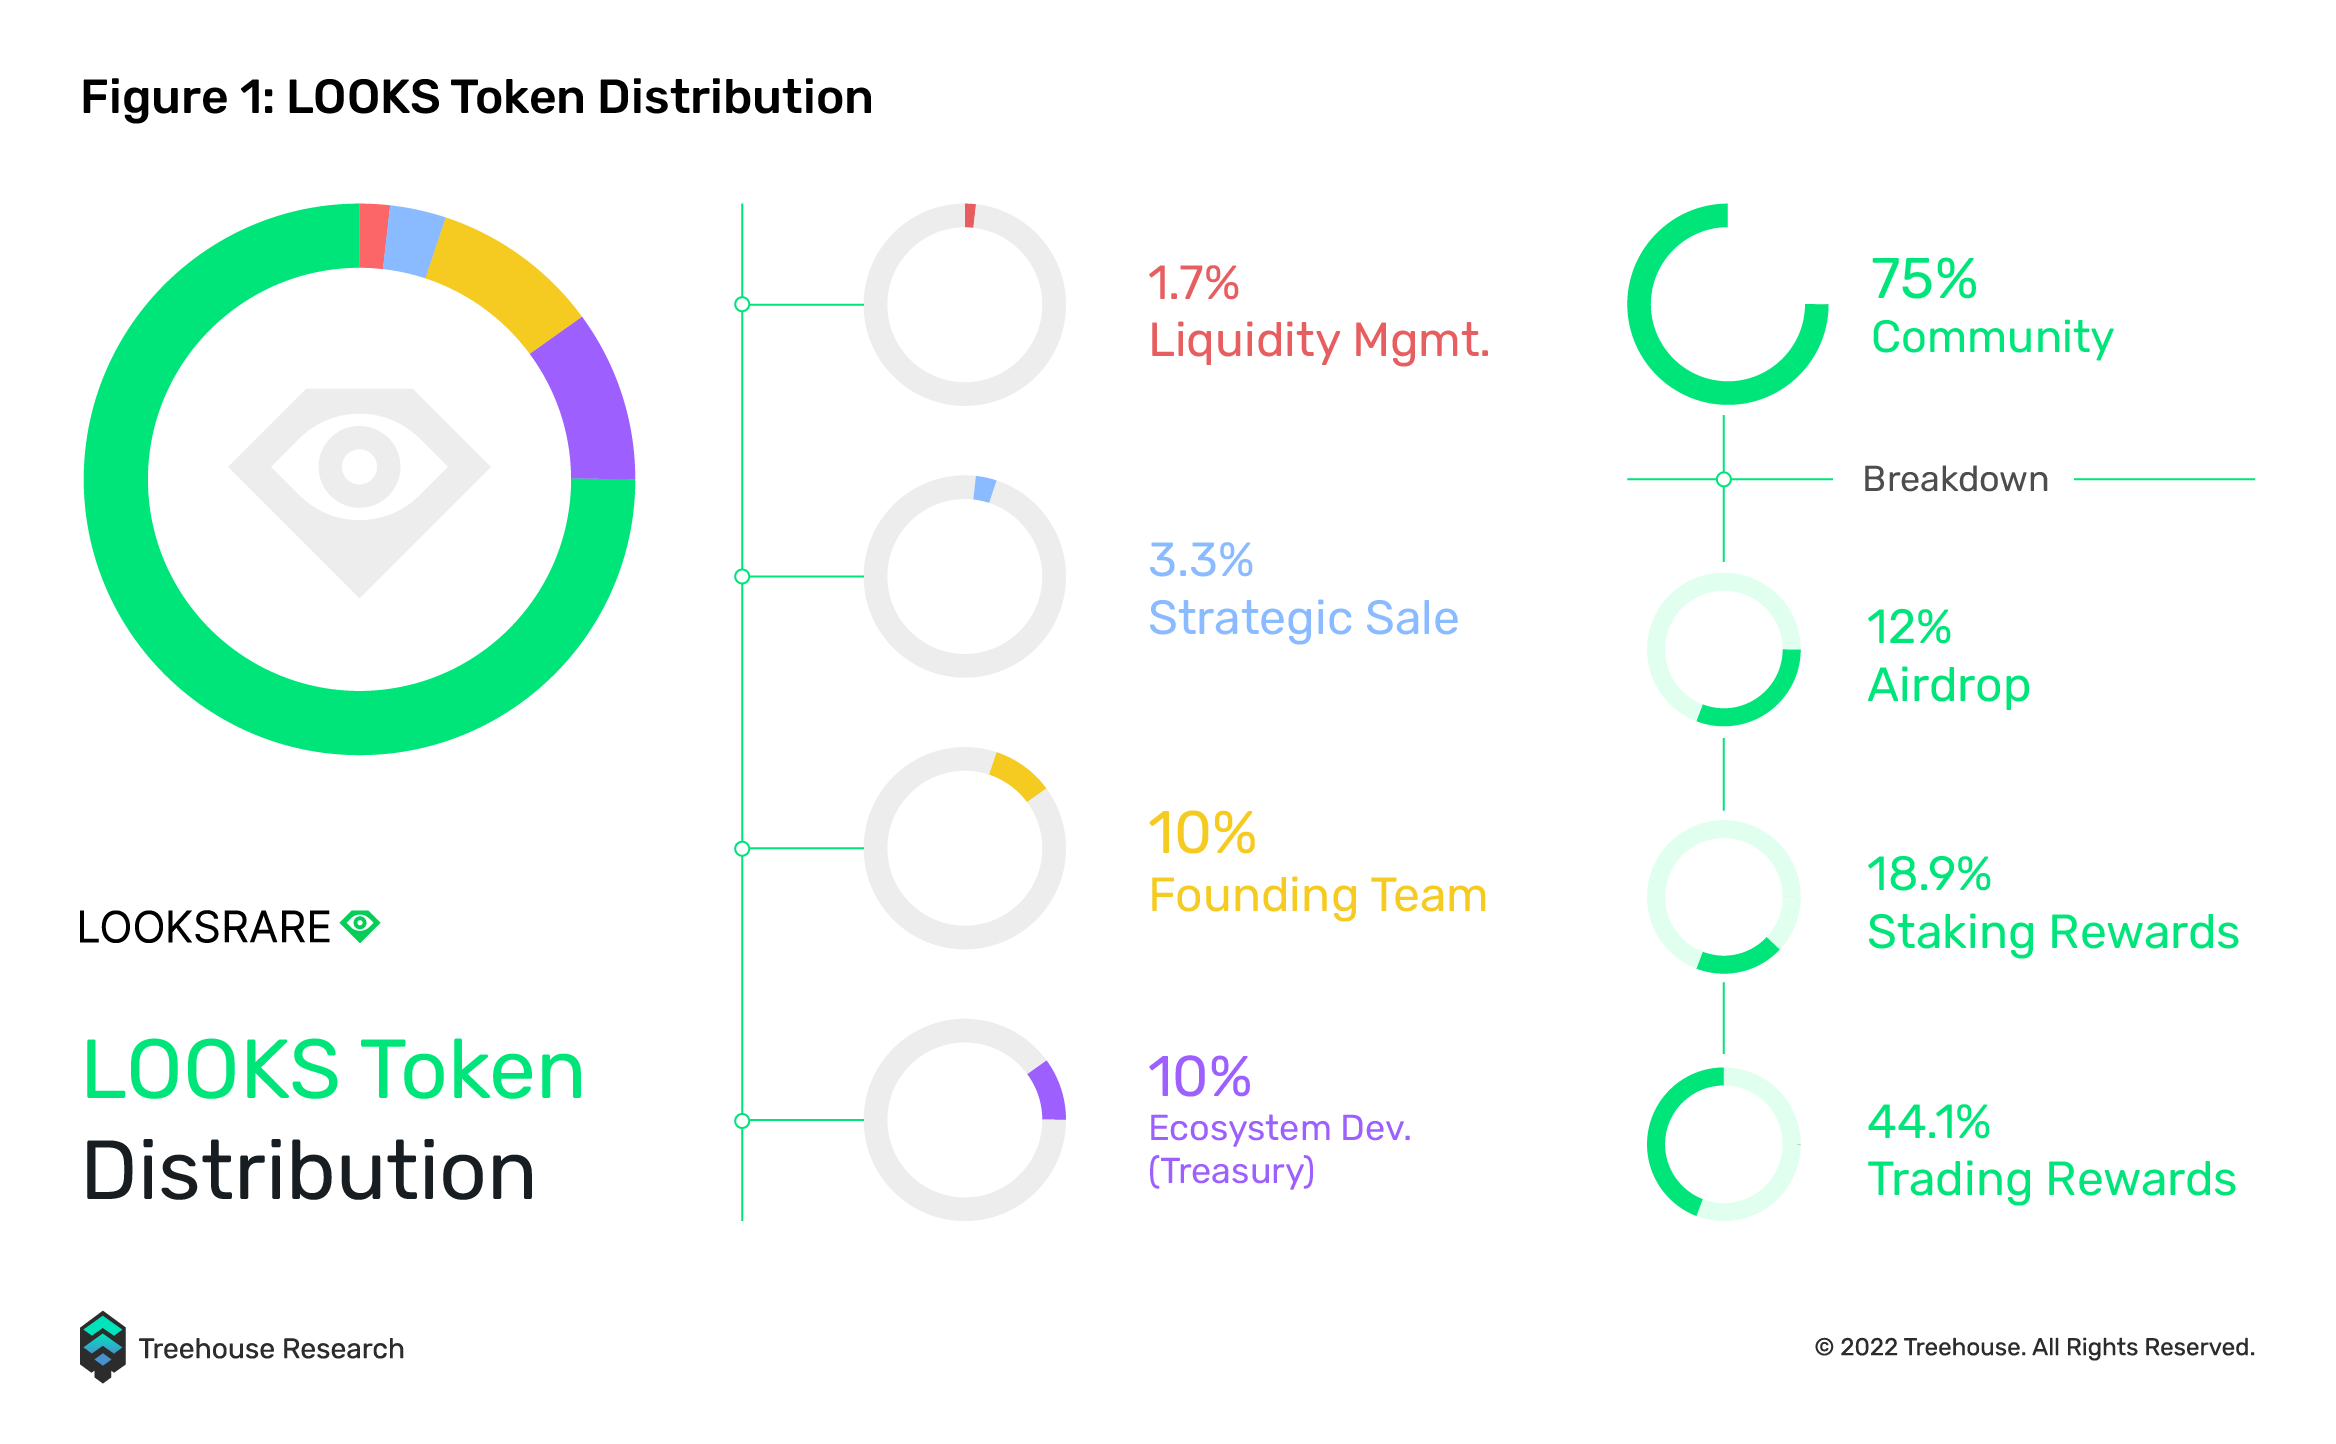 LOOKS token distribution